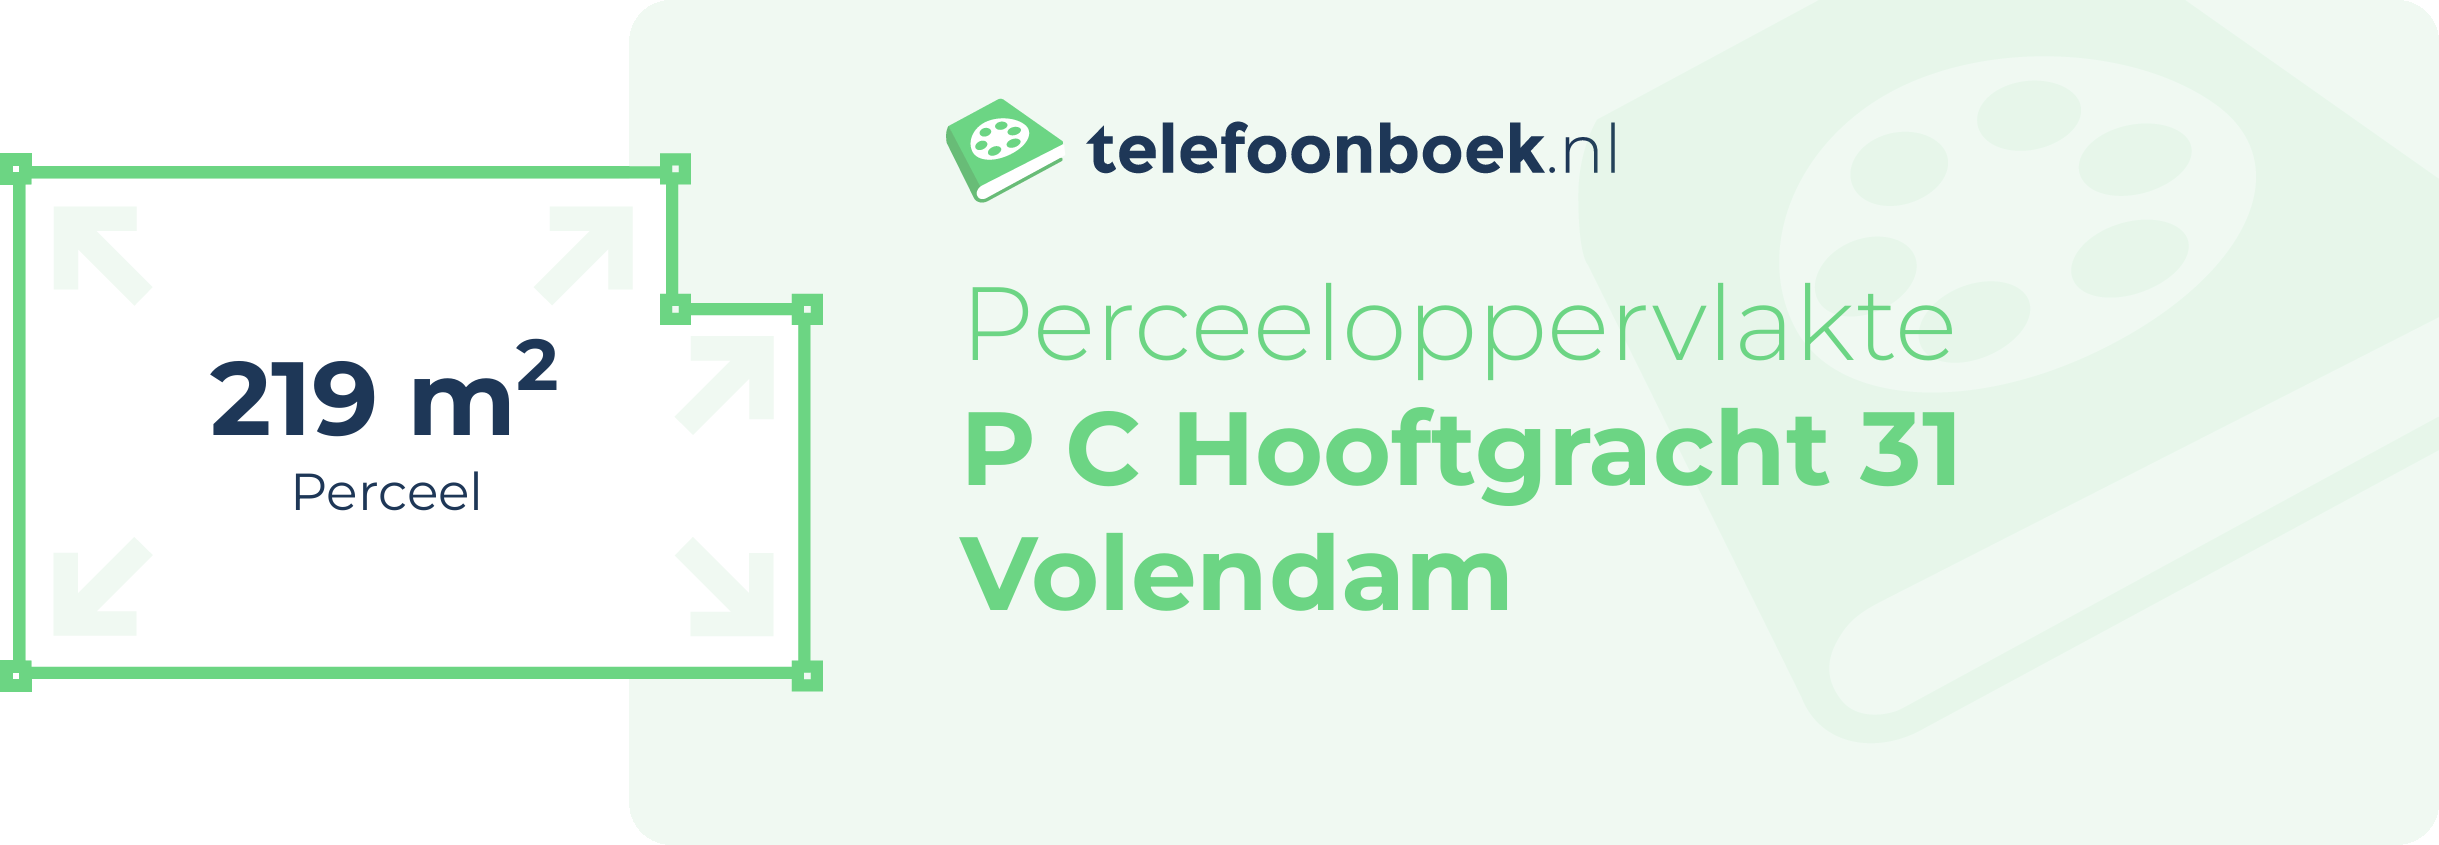 Perceeloppervlakte P C Hooftgracht 31 Volendam